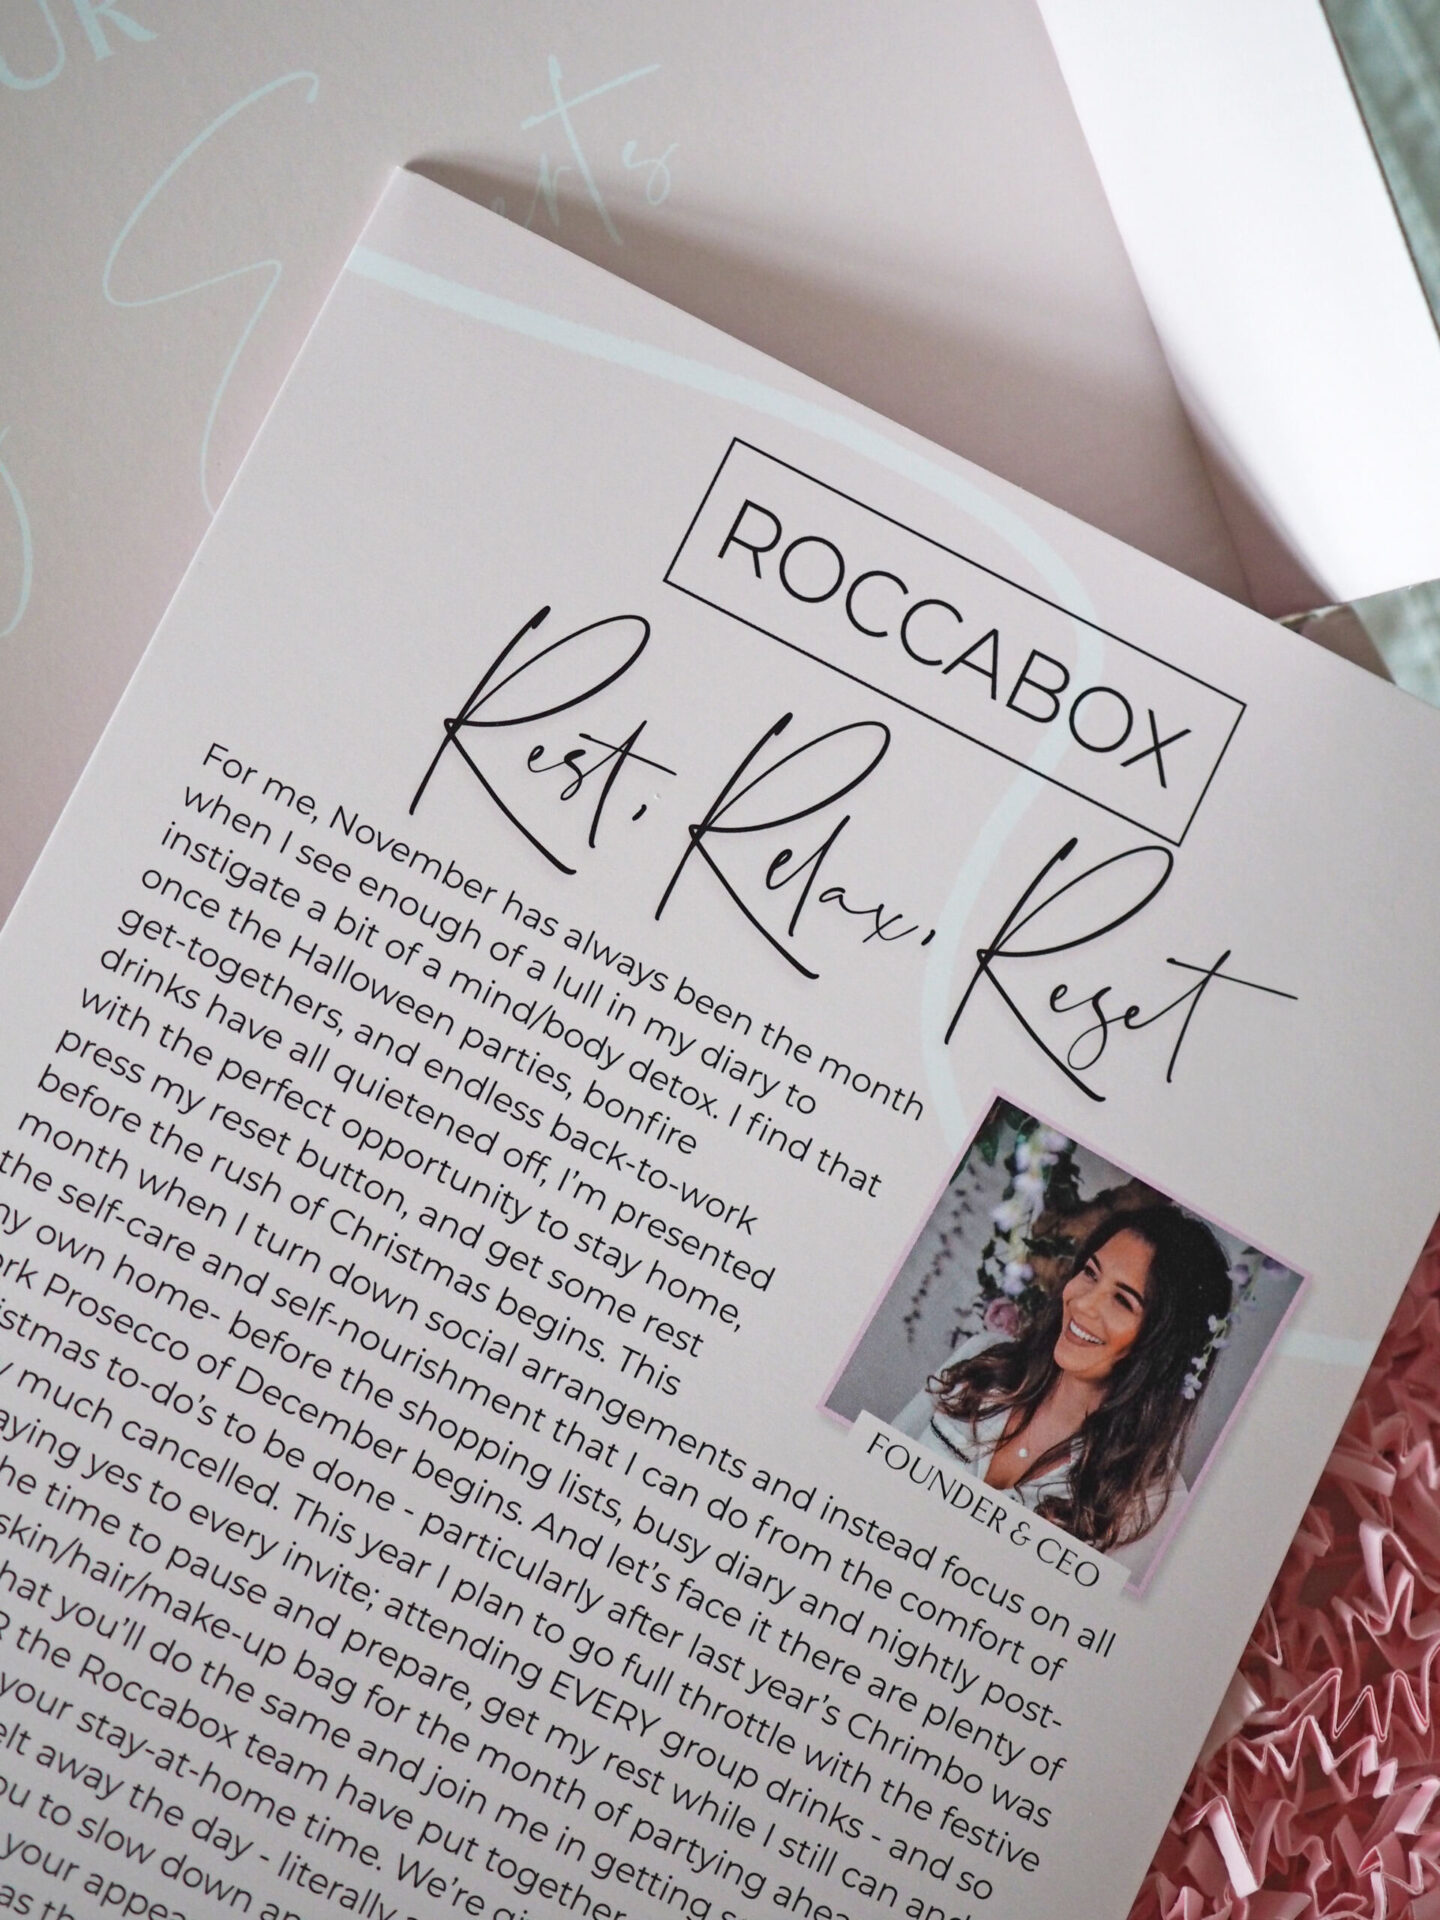 roccabox beauty box review